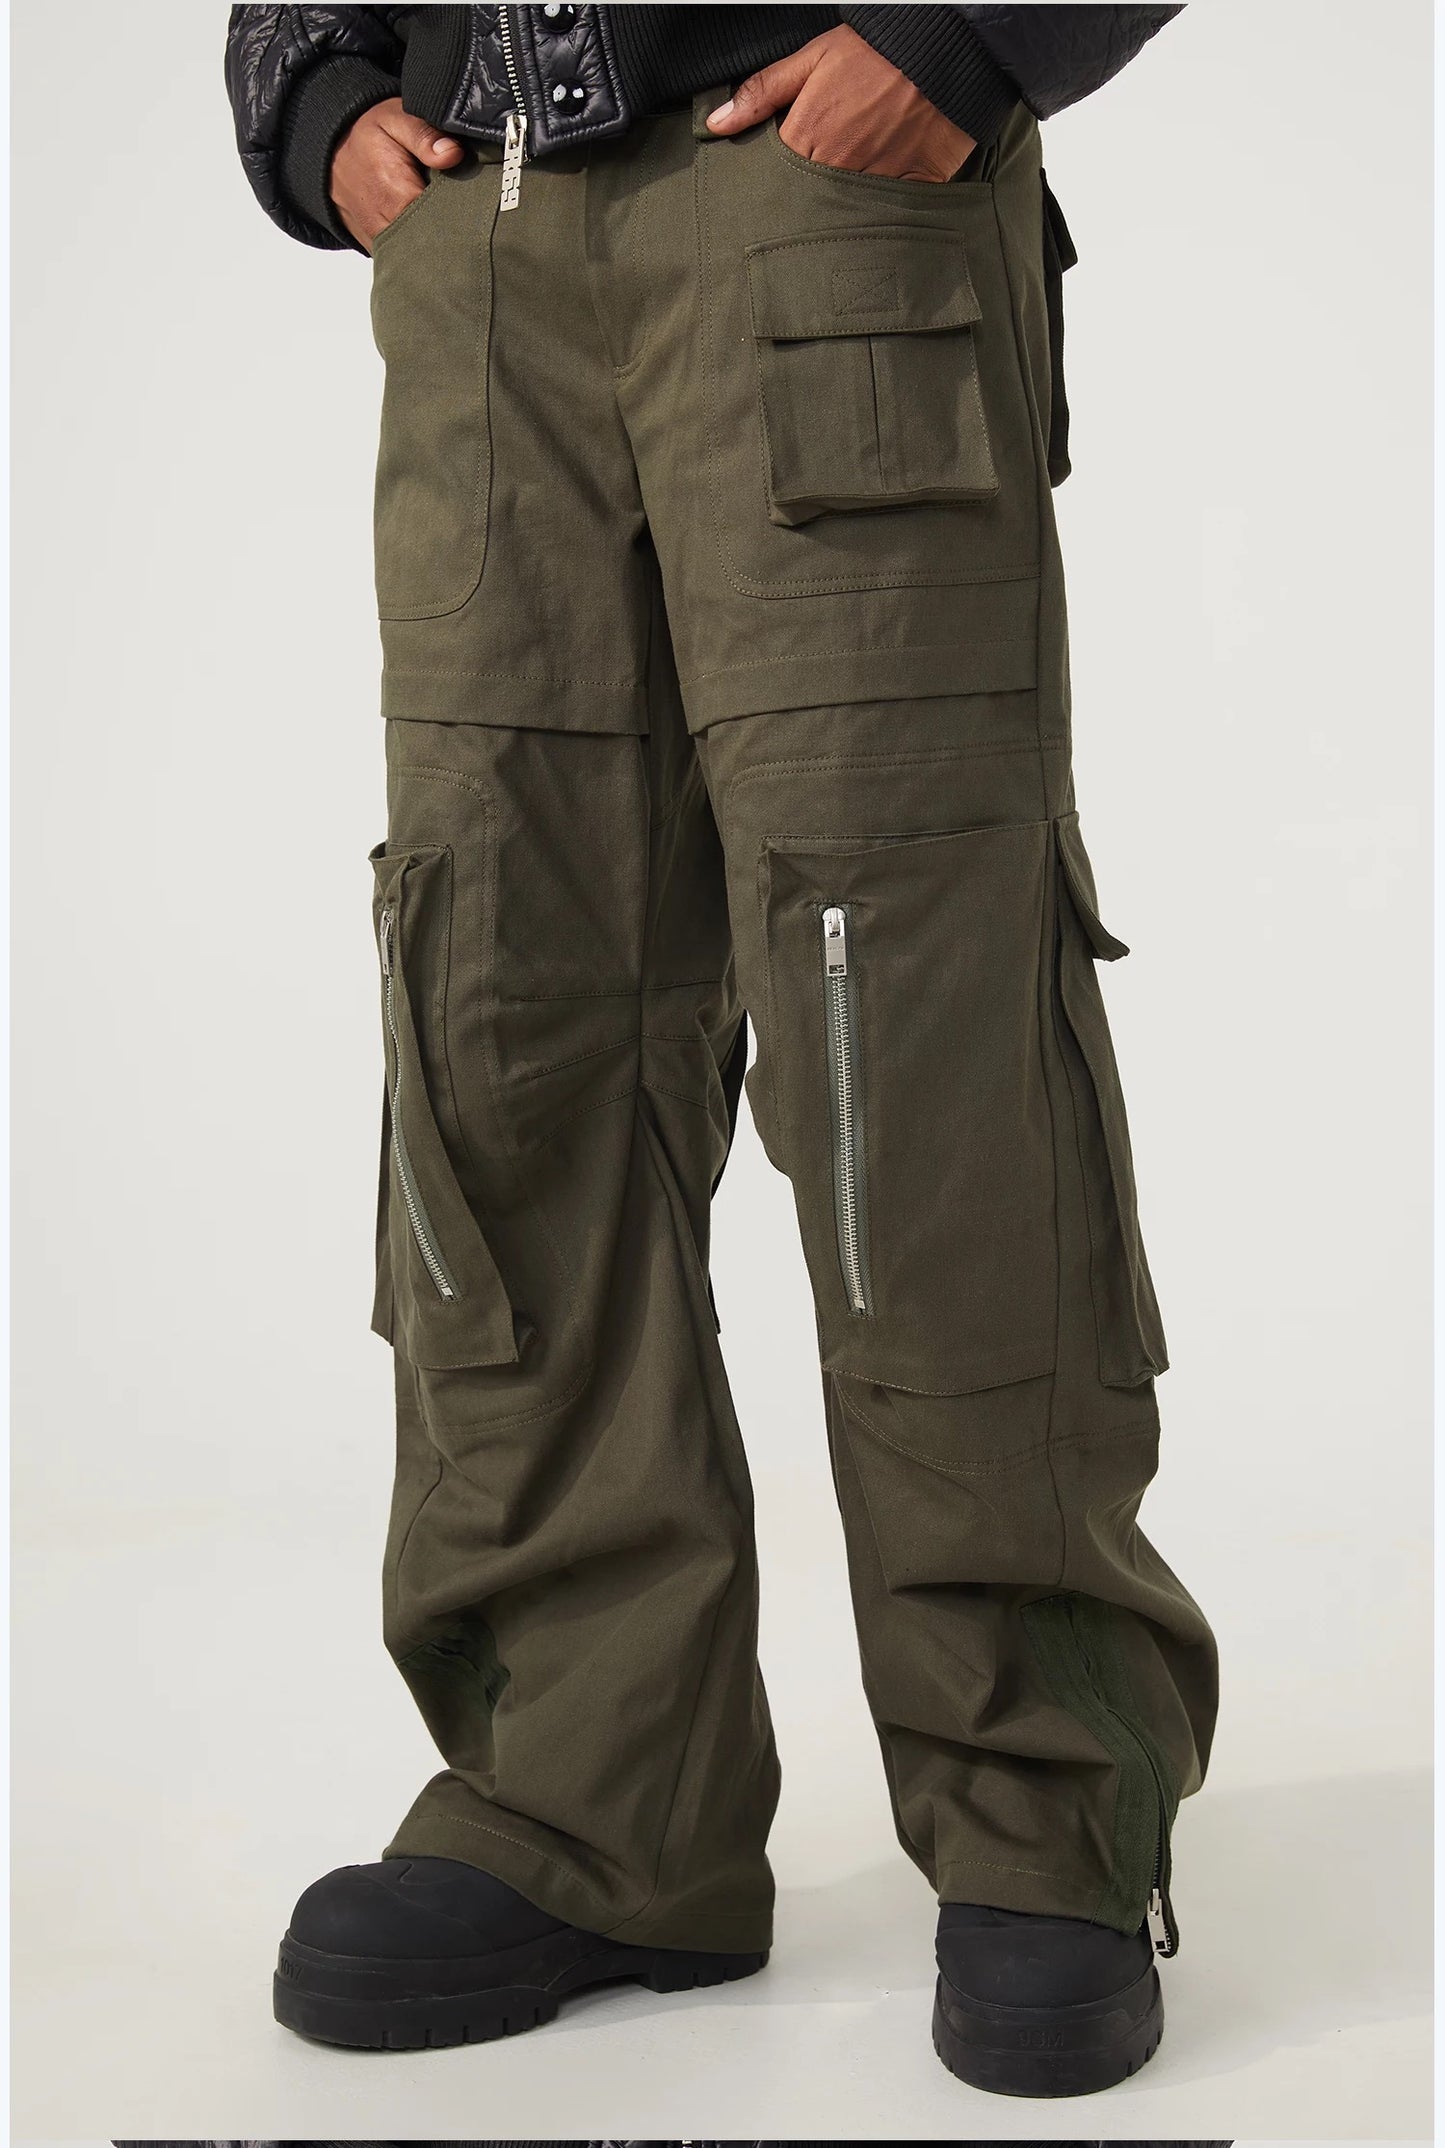 R69 Design tooling zipper pants